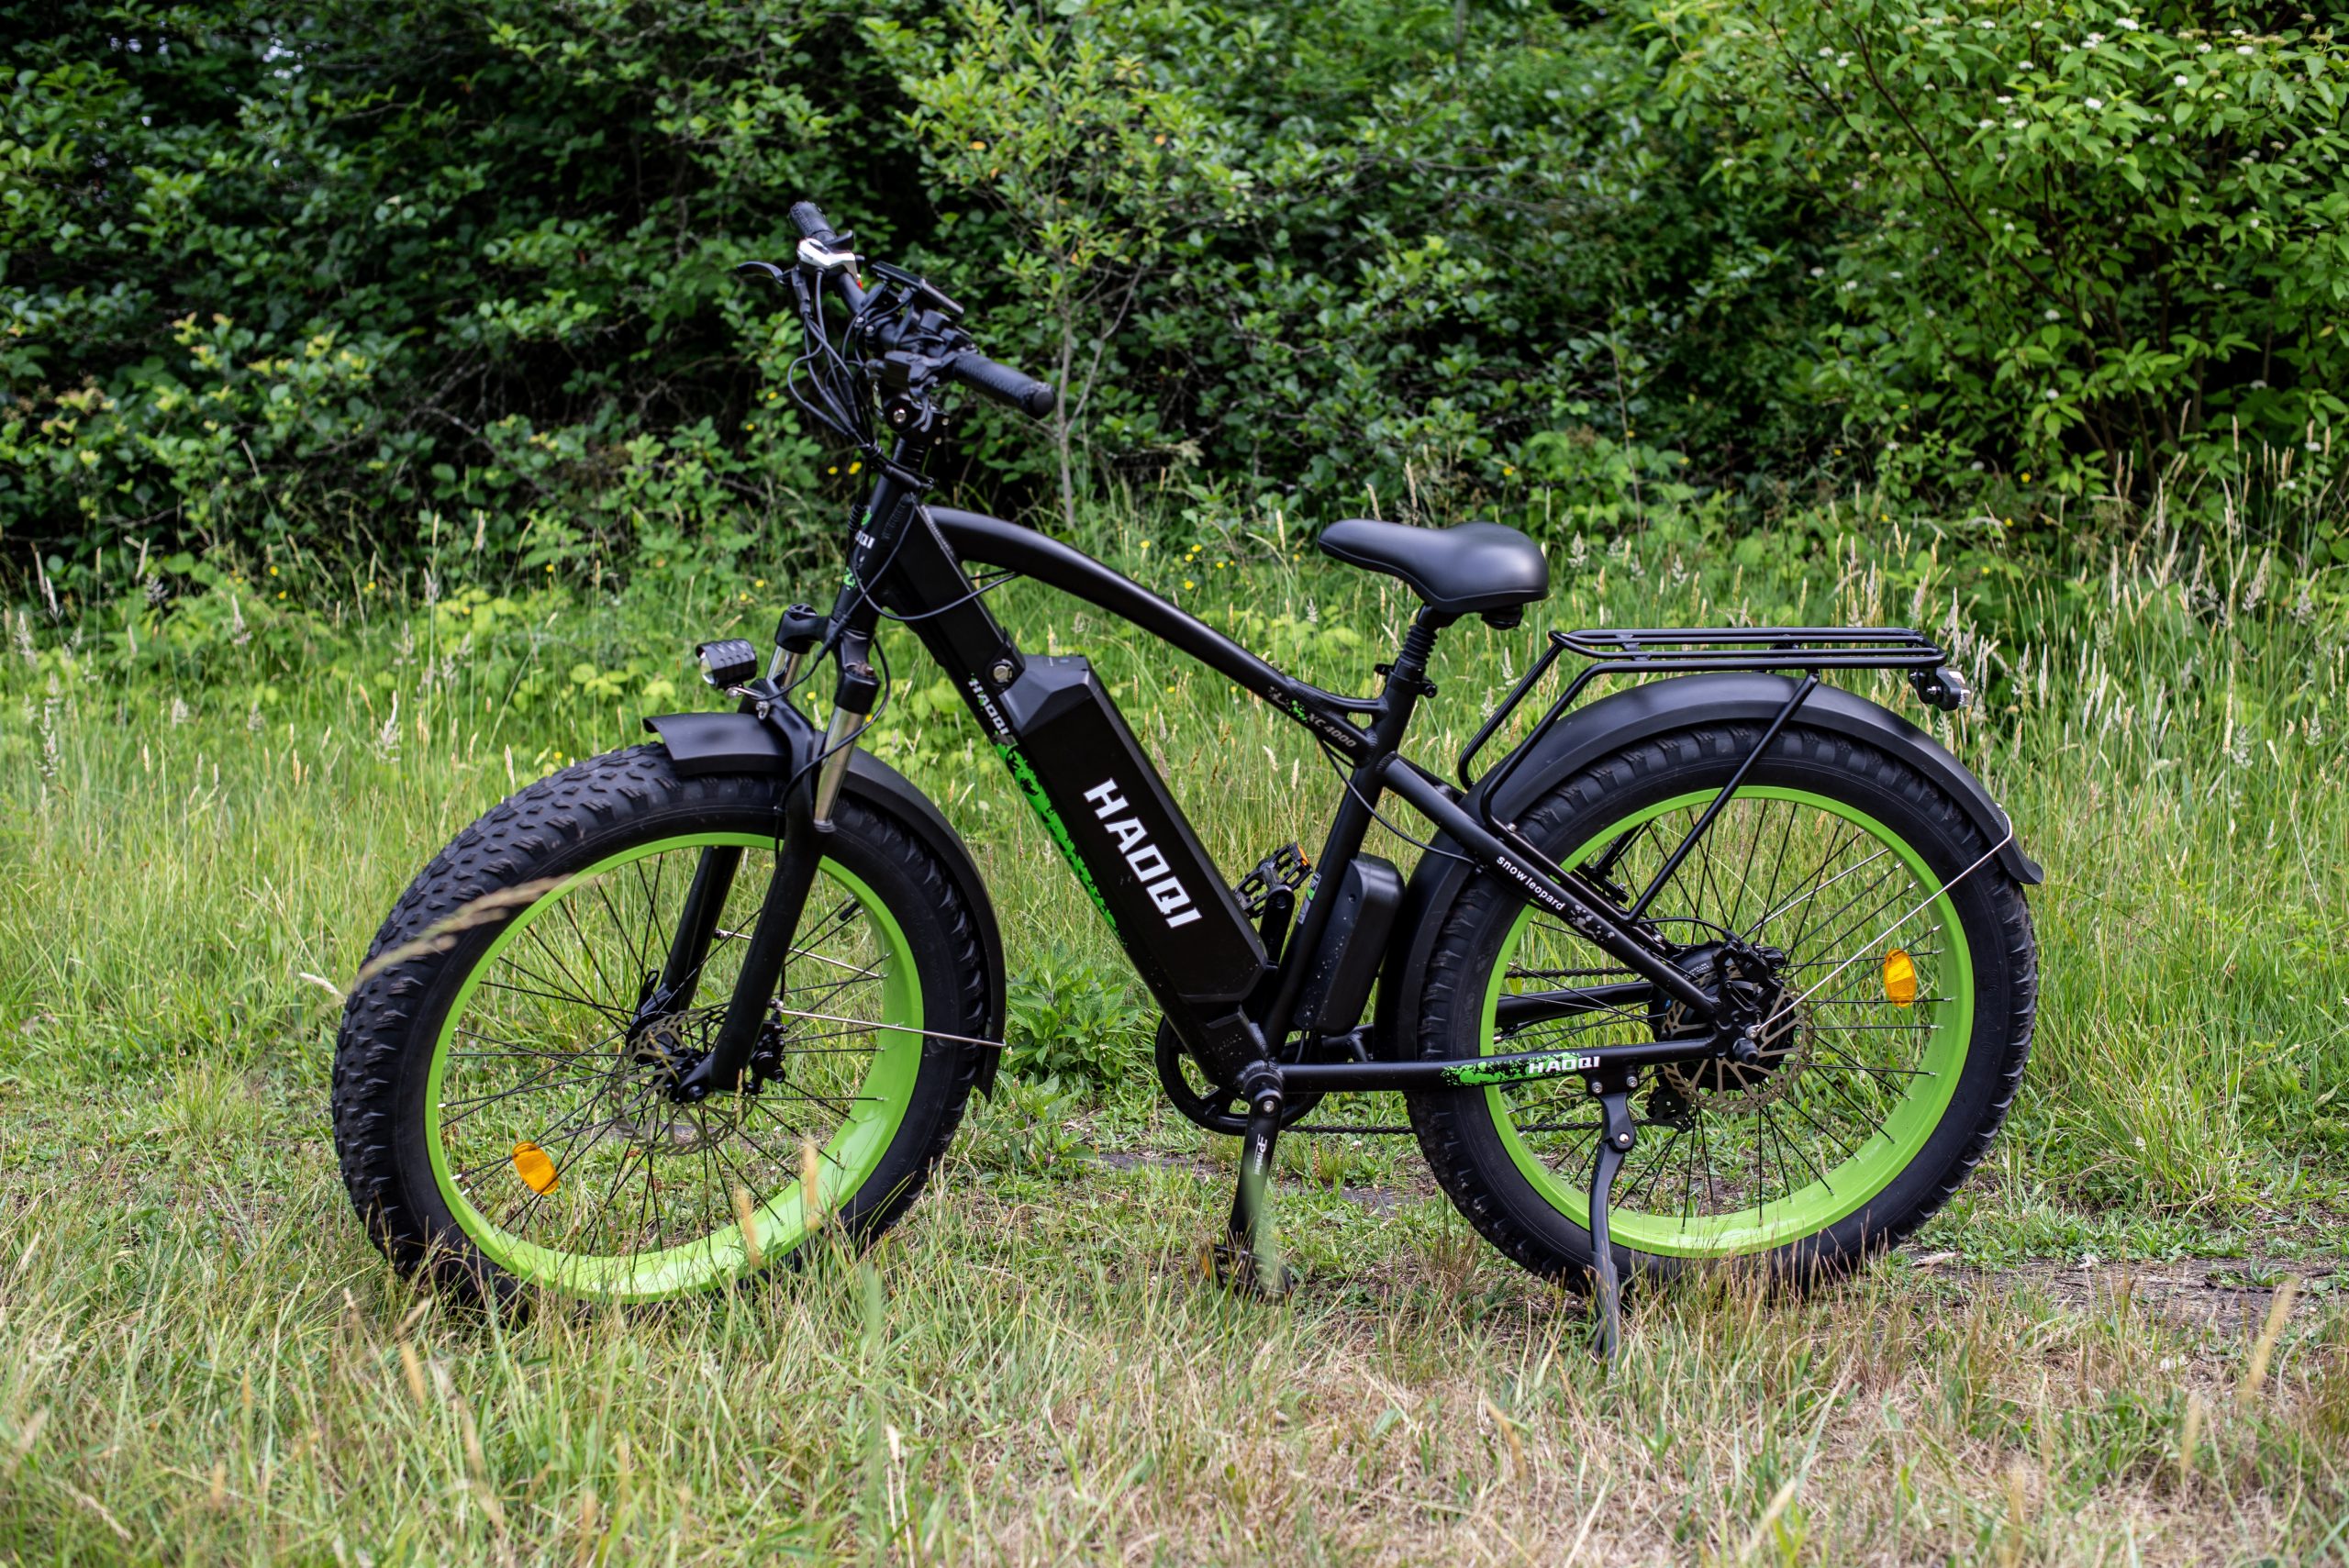 HAOQI Green Leopard Pro Electric Bike Review 2023